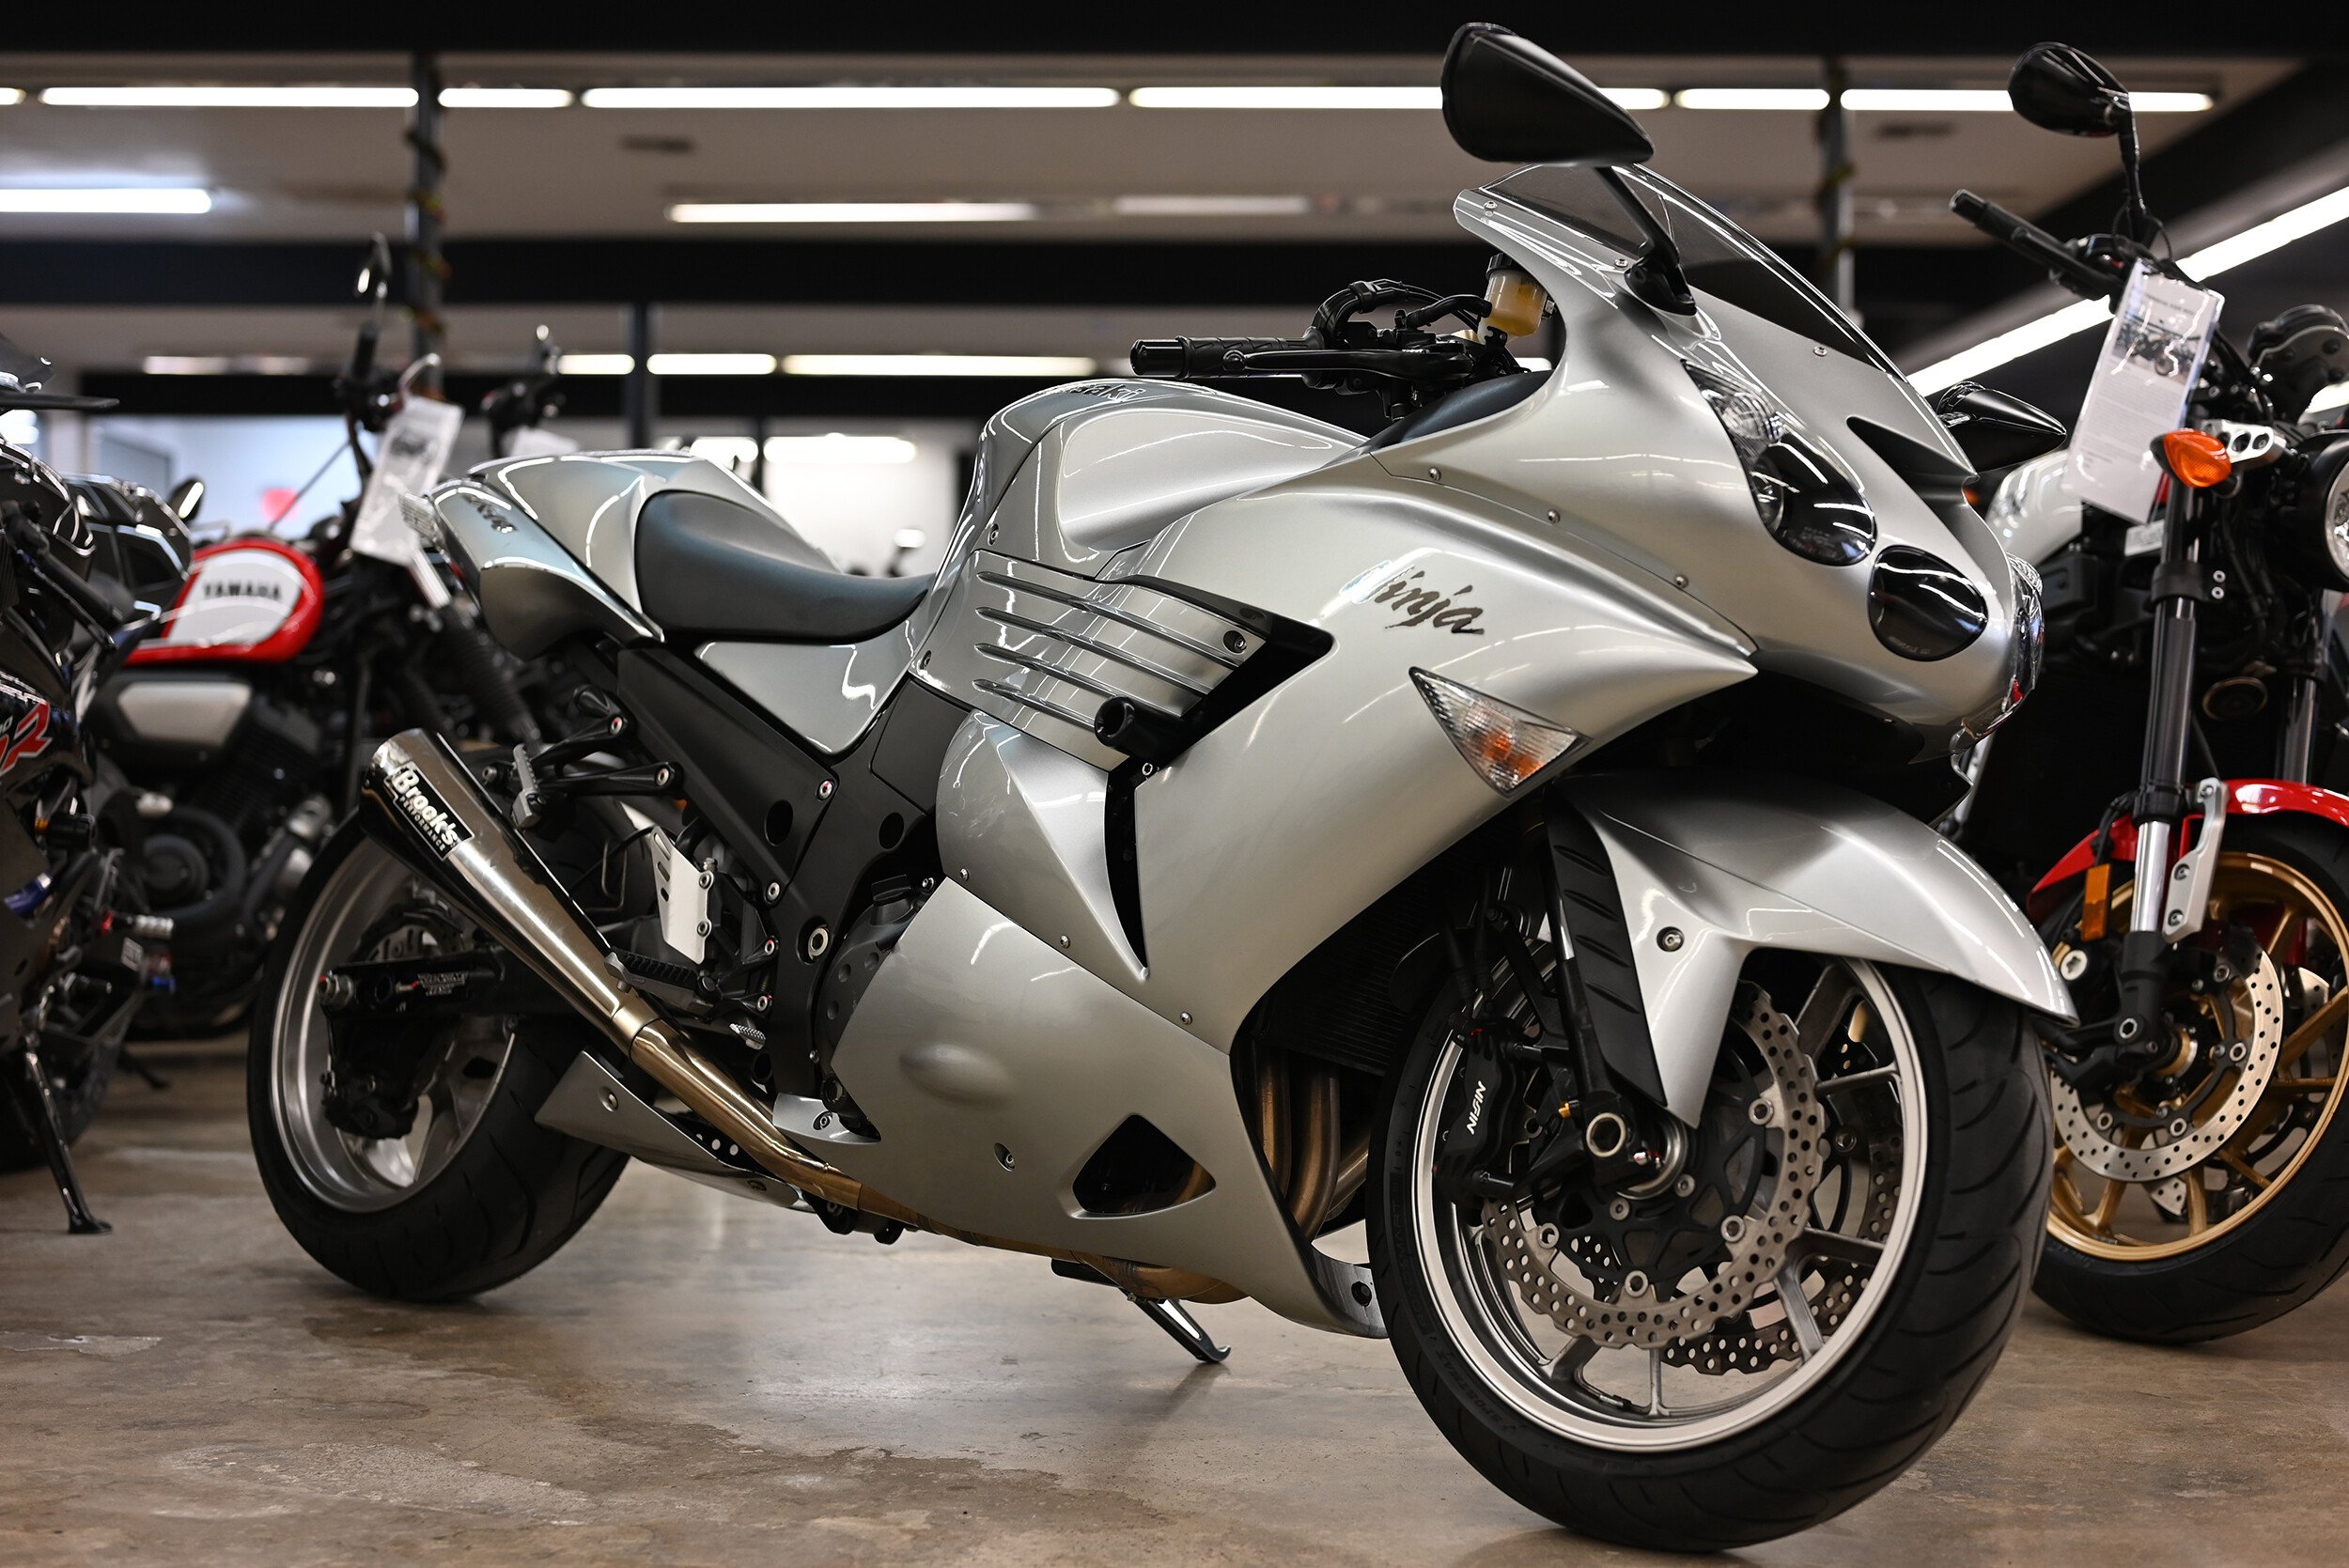 Kawasaki Ninja ZX-14 Motorcycles for Sale - Motorcycles on Autotrader